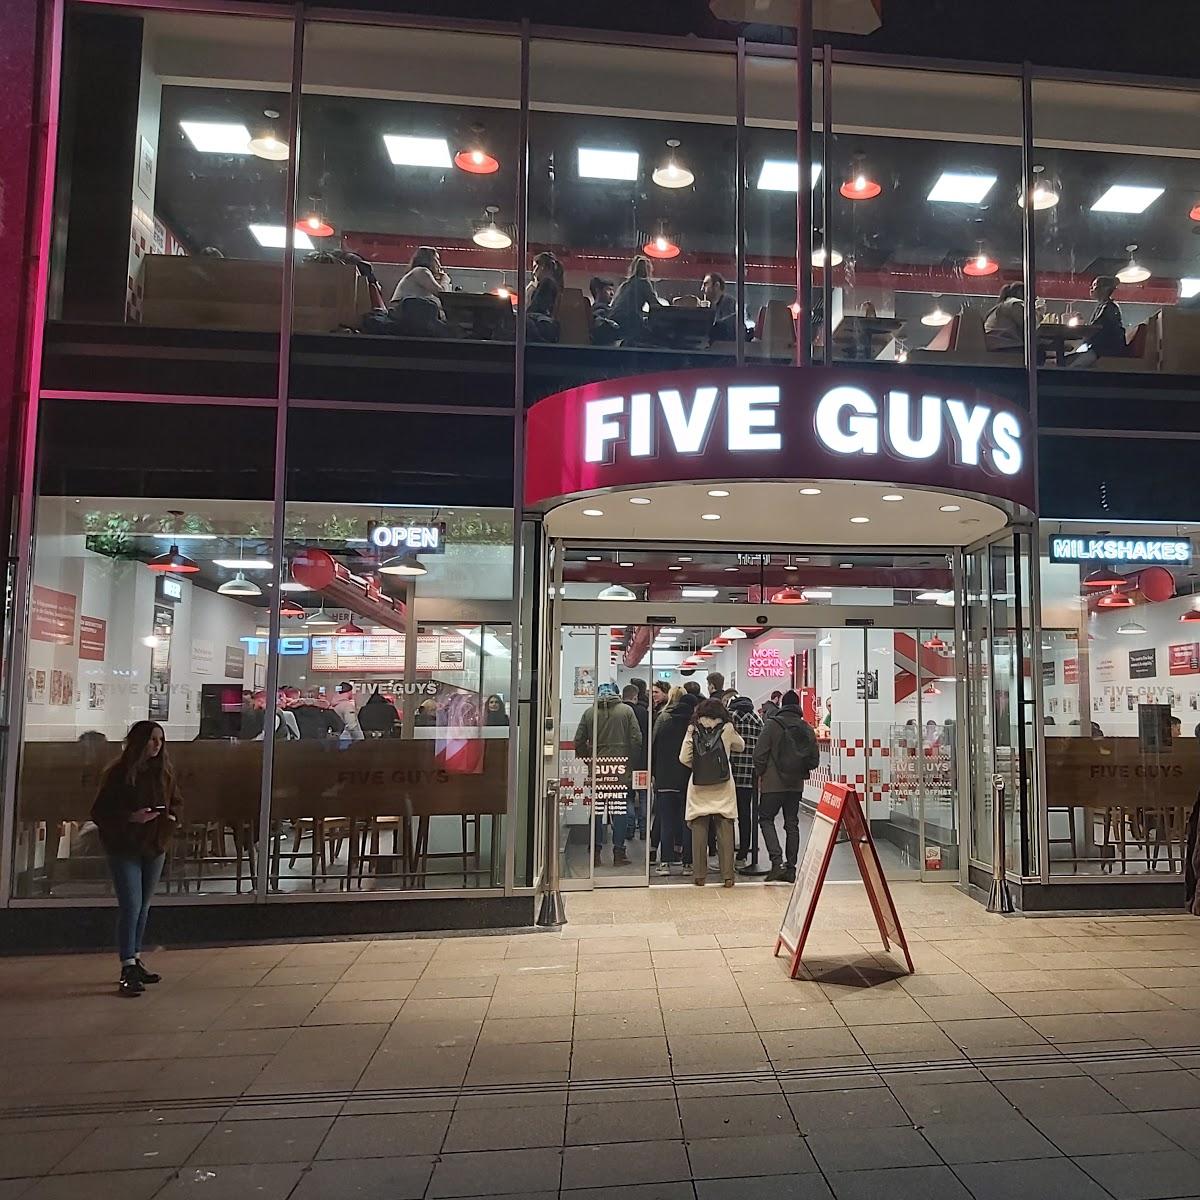 Restaurant "Five Guys" in Stuttgart